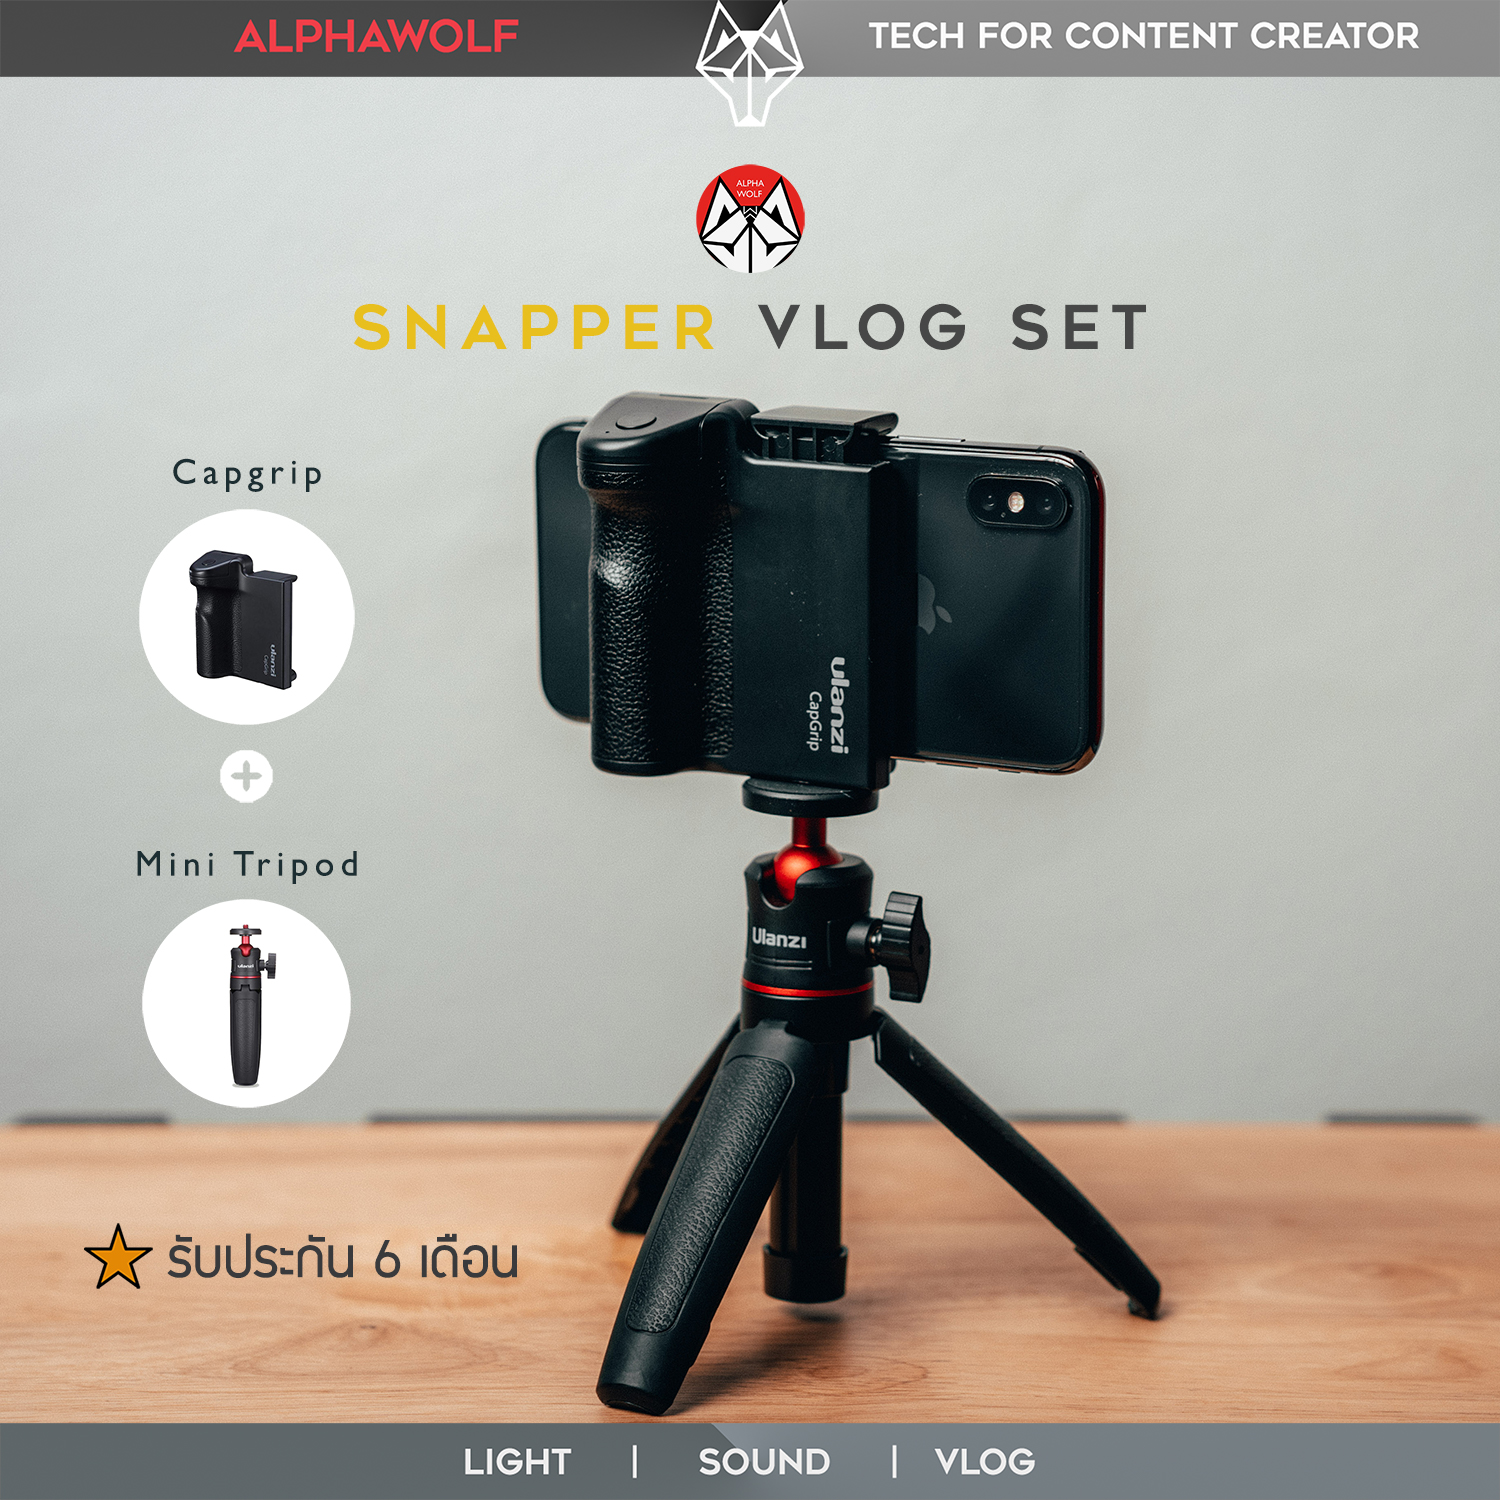 Ulanzi Snapper Vlog Set ชุด Smartphone Vlog ถ่ายรูป ถ่ายวีดีโอ ขนาดพกพา ปุ่มกดชัตเตอร์บลูทูธ + ขาตั้งกล้อง ปรับความสูงได้ถึง 25cm ประกัน 6เดือน  ALPHAWOLF